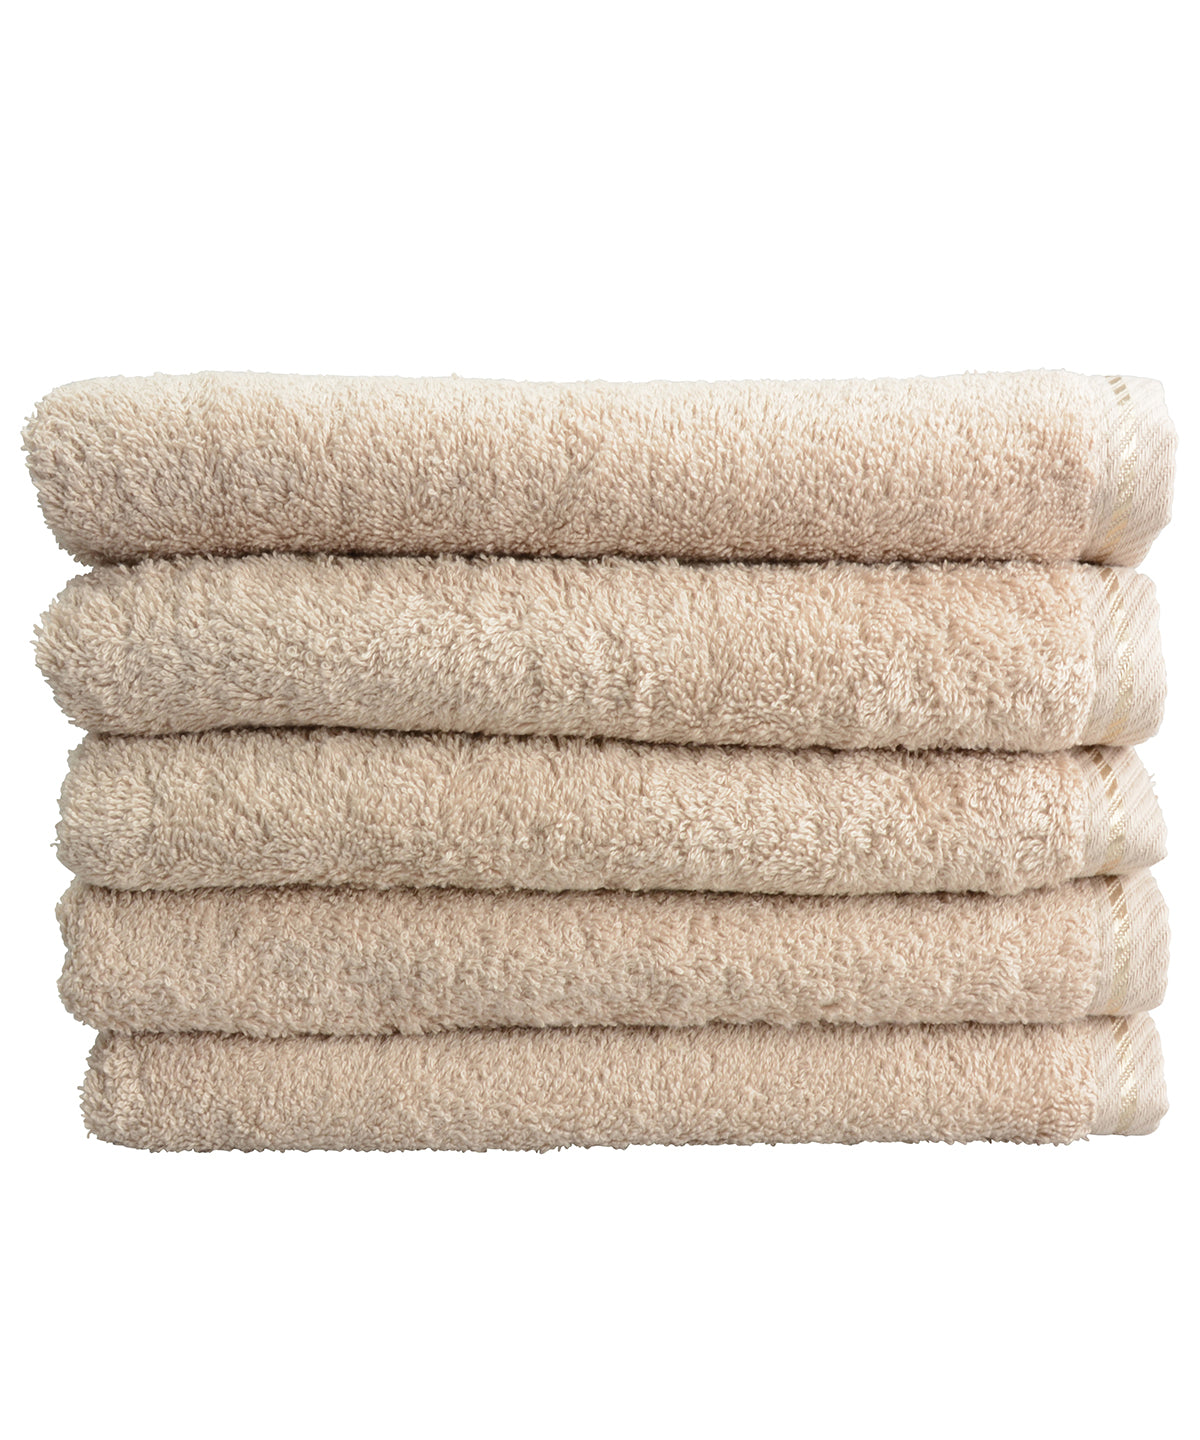 Personalised Towels - Natural A&R Towels ARTG® Hand towel